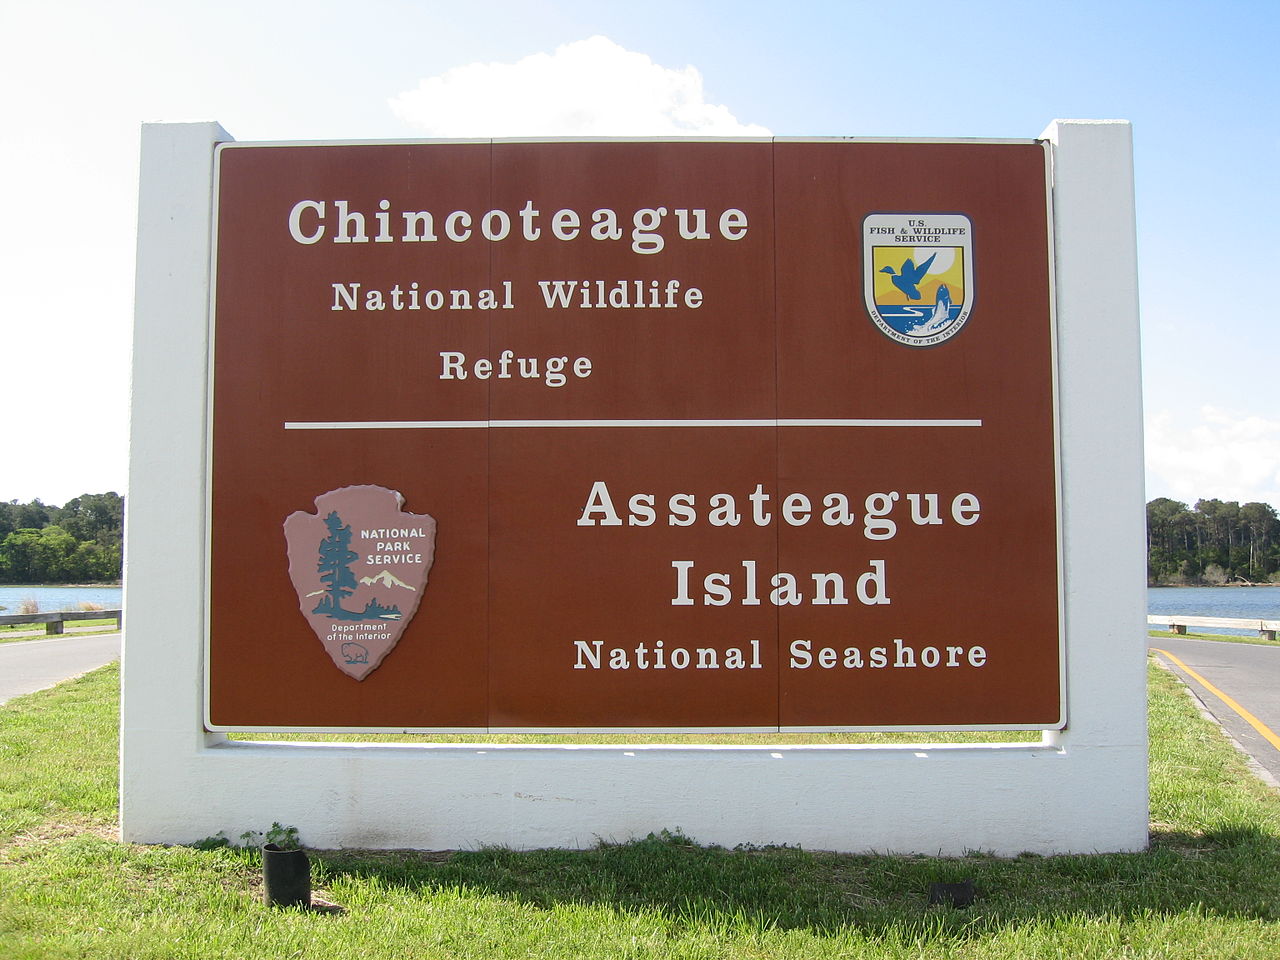 Entrance sign to Chincoteague National Wildlife Refuge and Assateague Island National Seashore